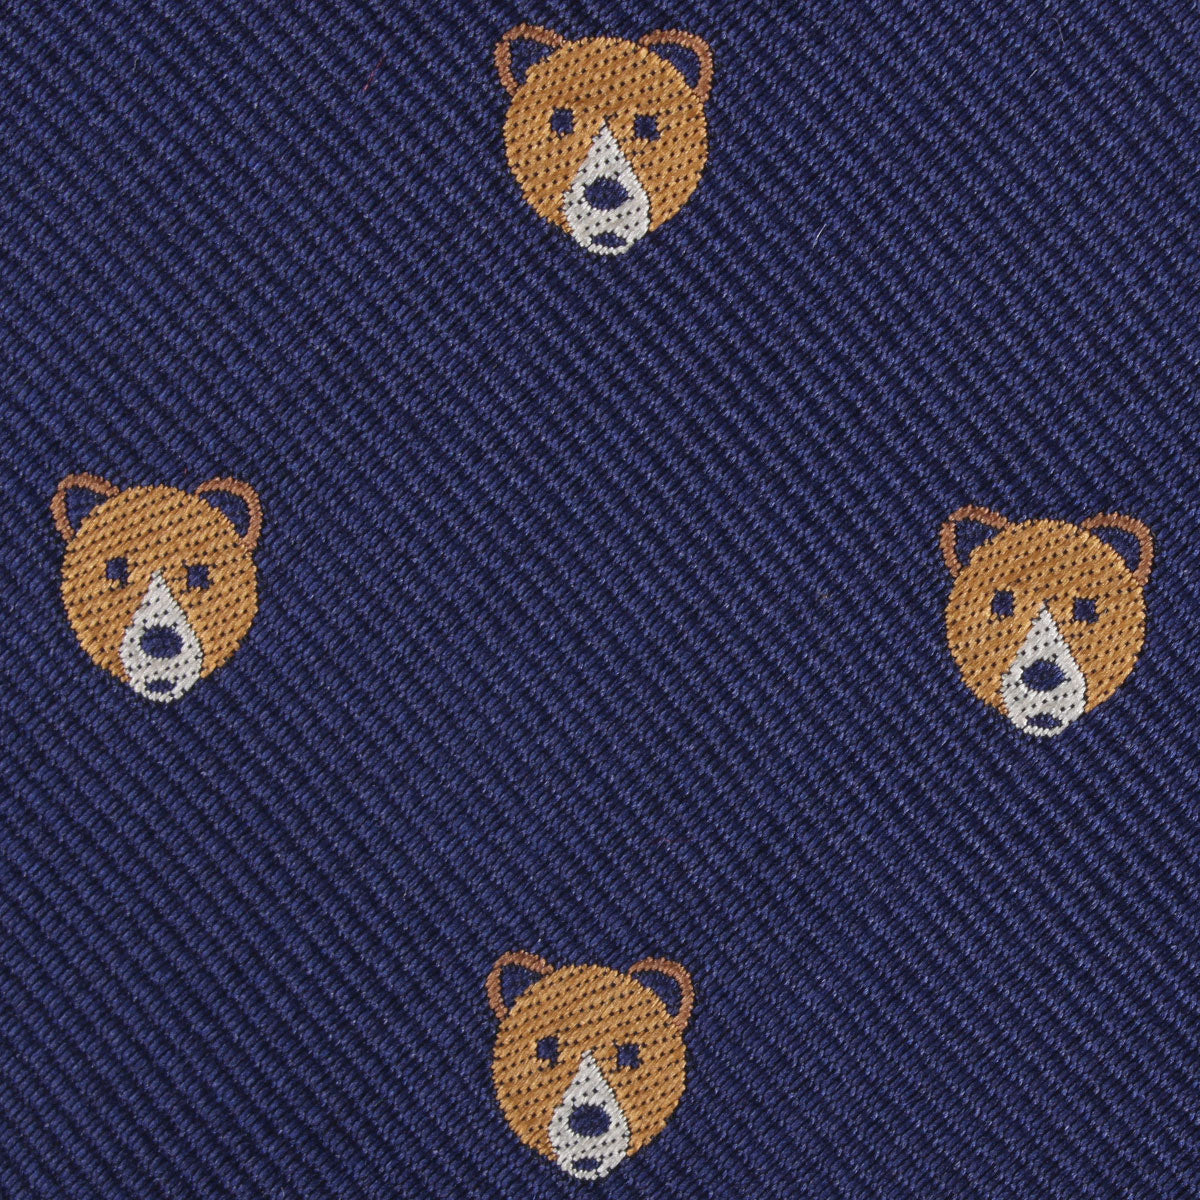 American Brown Bear Fabric Necktie